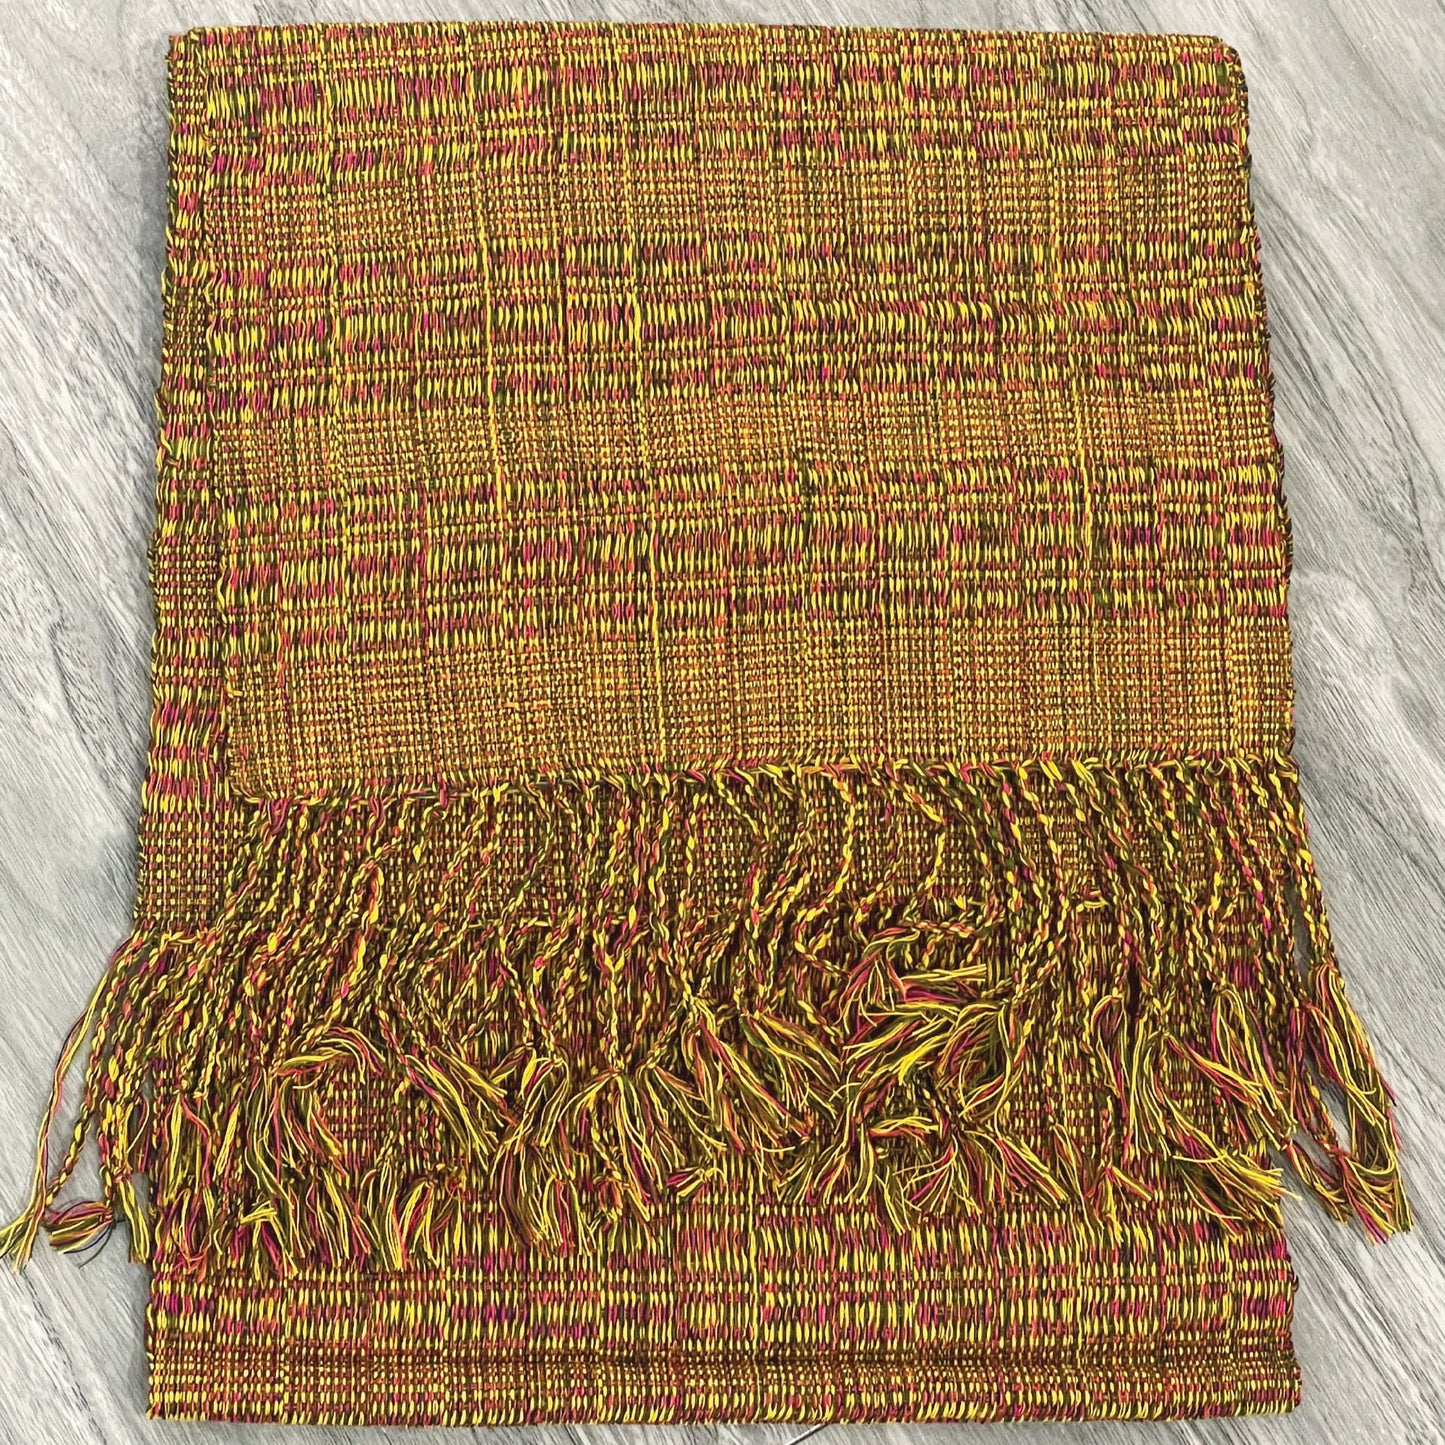 Bhutanese woven scarf